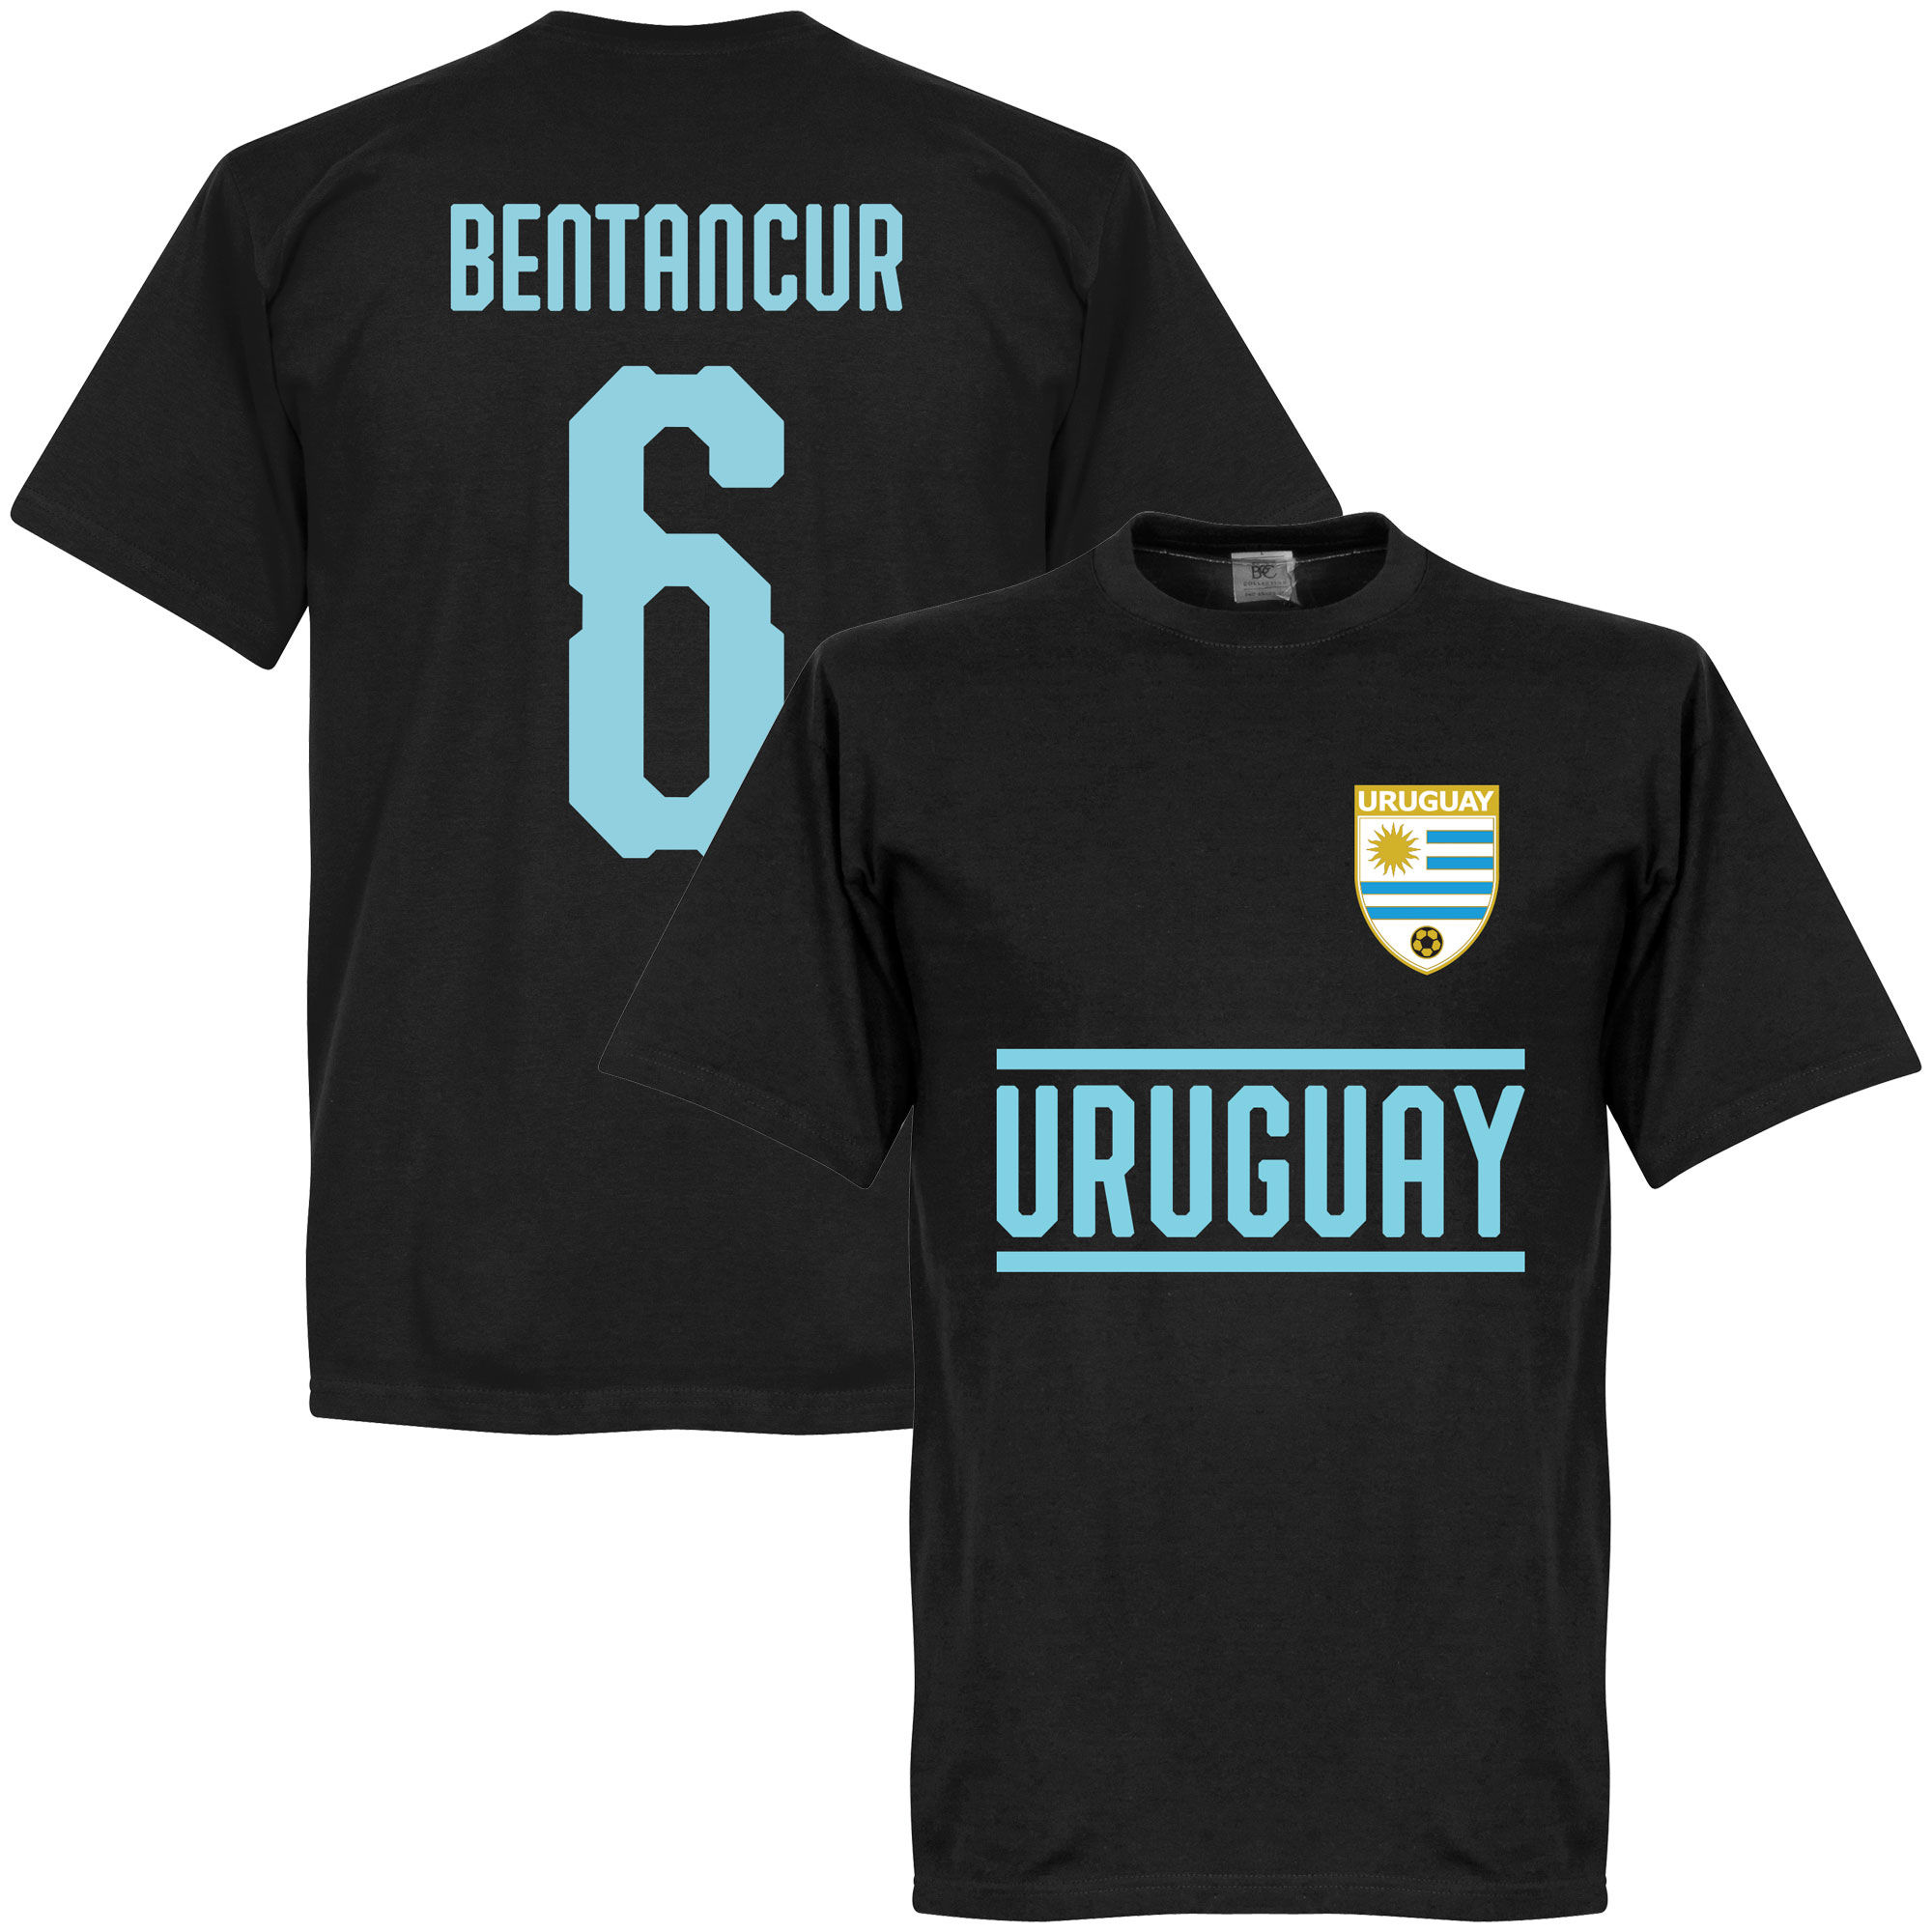 Uruguay - Tričko - číslo 6, Rodrigo Bentancur, černé